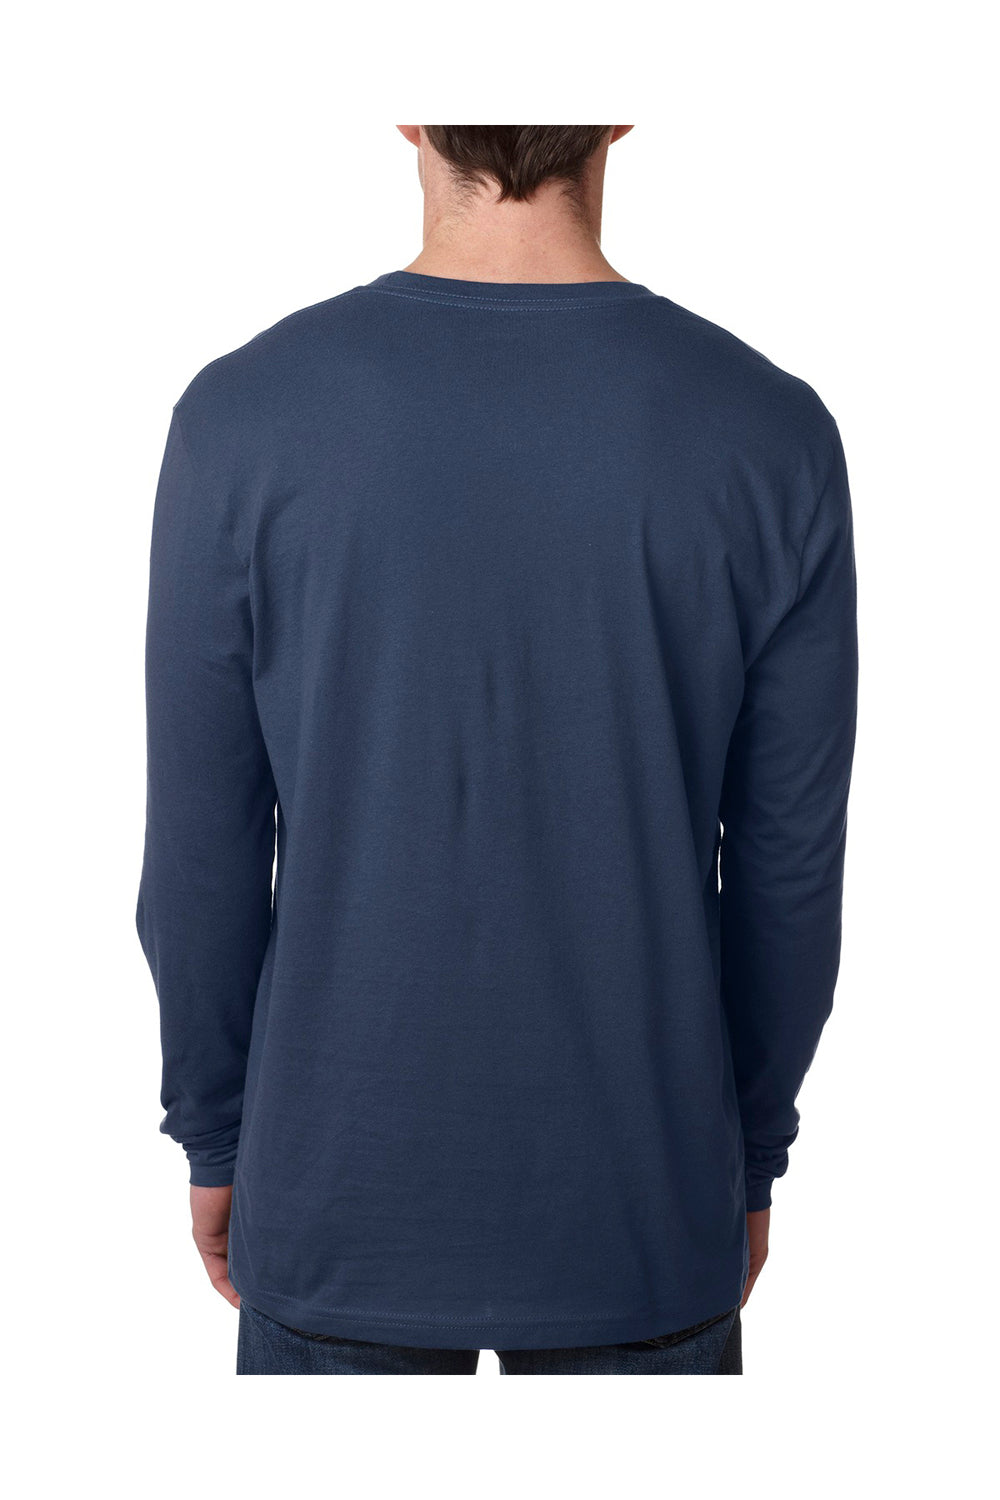 Next Level N3601 Mens Fine Jersey Long Sleeve Crewneck T-Shirt Indigo Blue Back